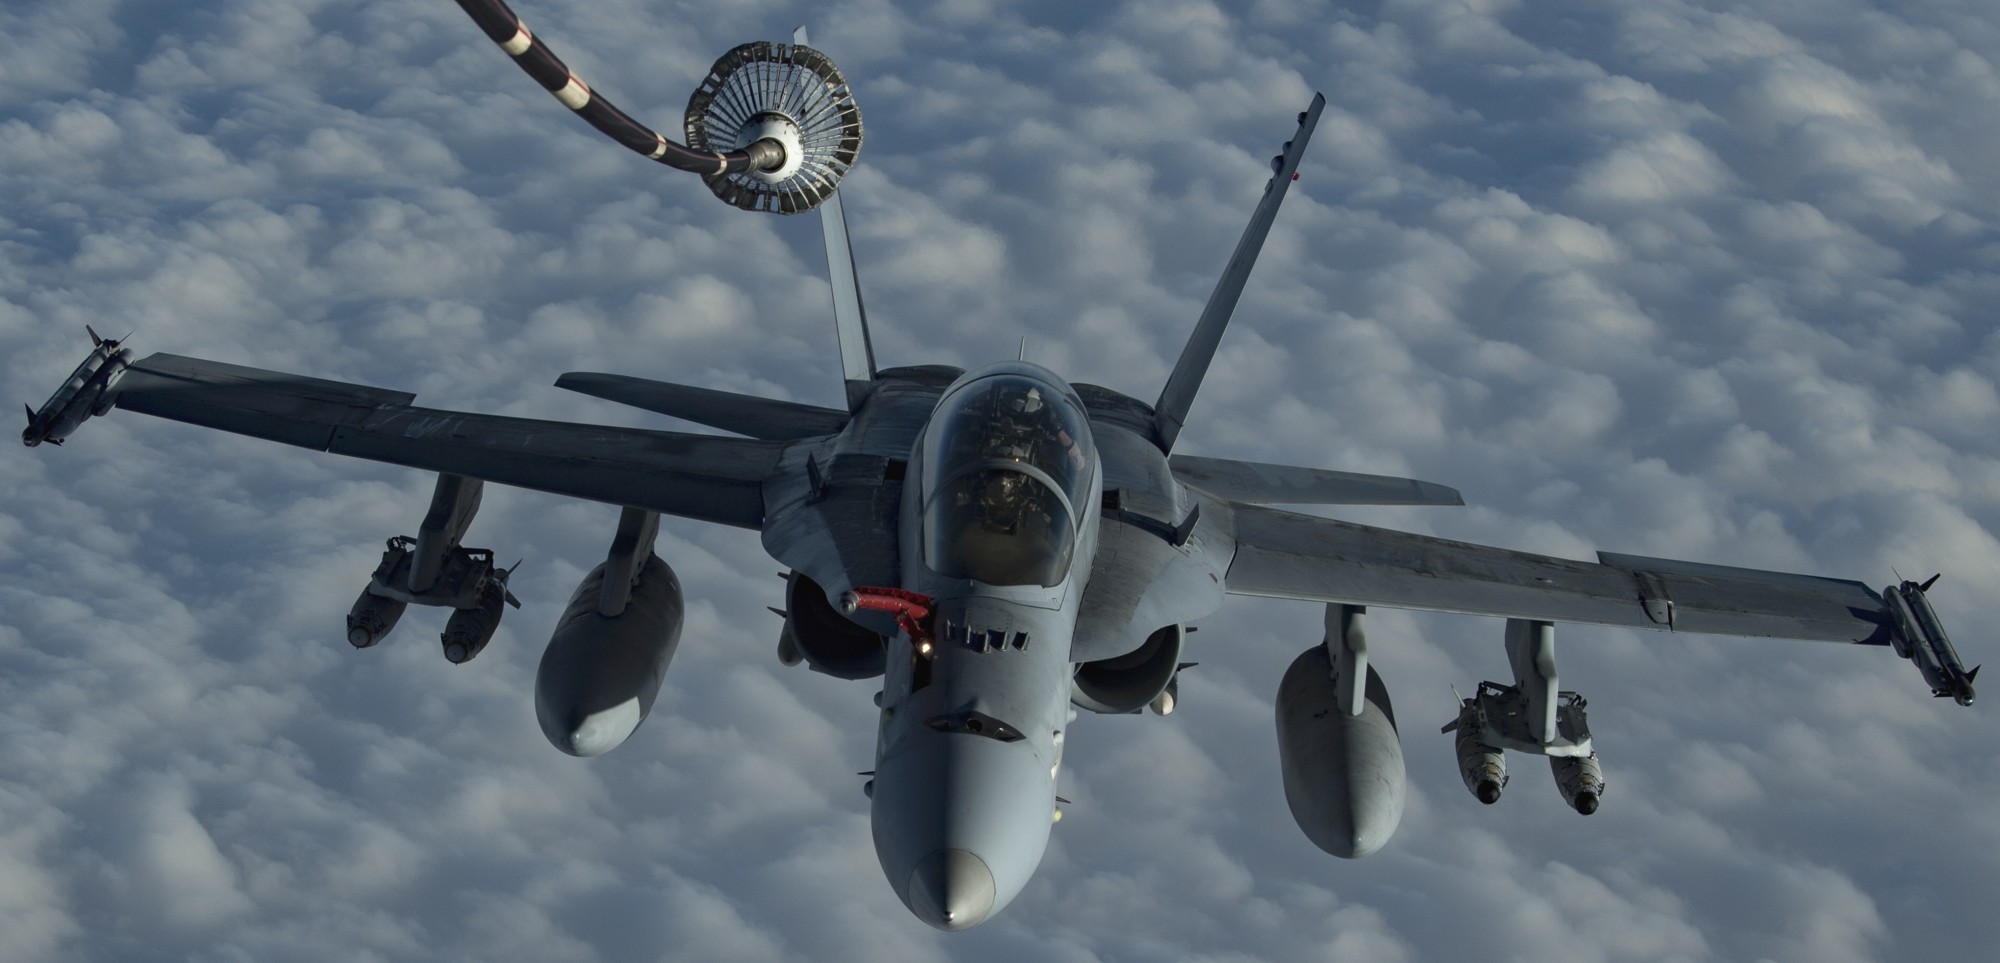 vmfa-251 thunderbolts marine fighter attack squadron usmc f/a-18d hornet centcom aor 163